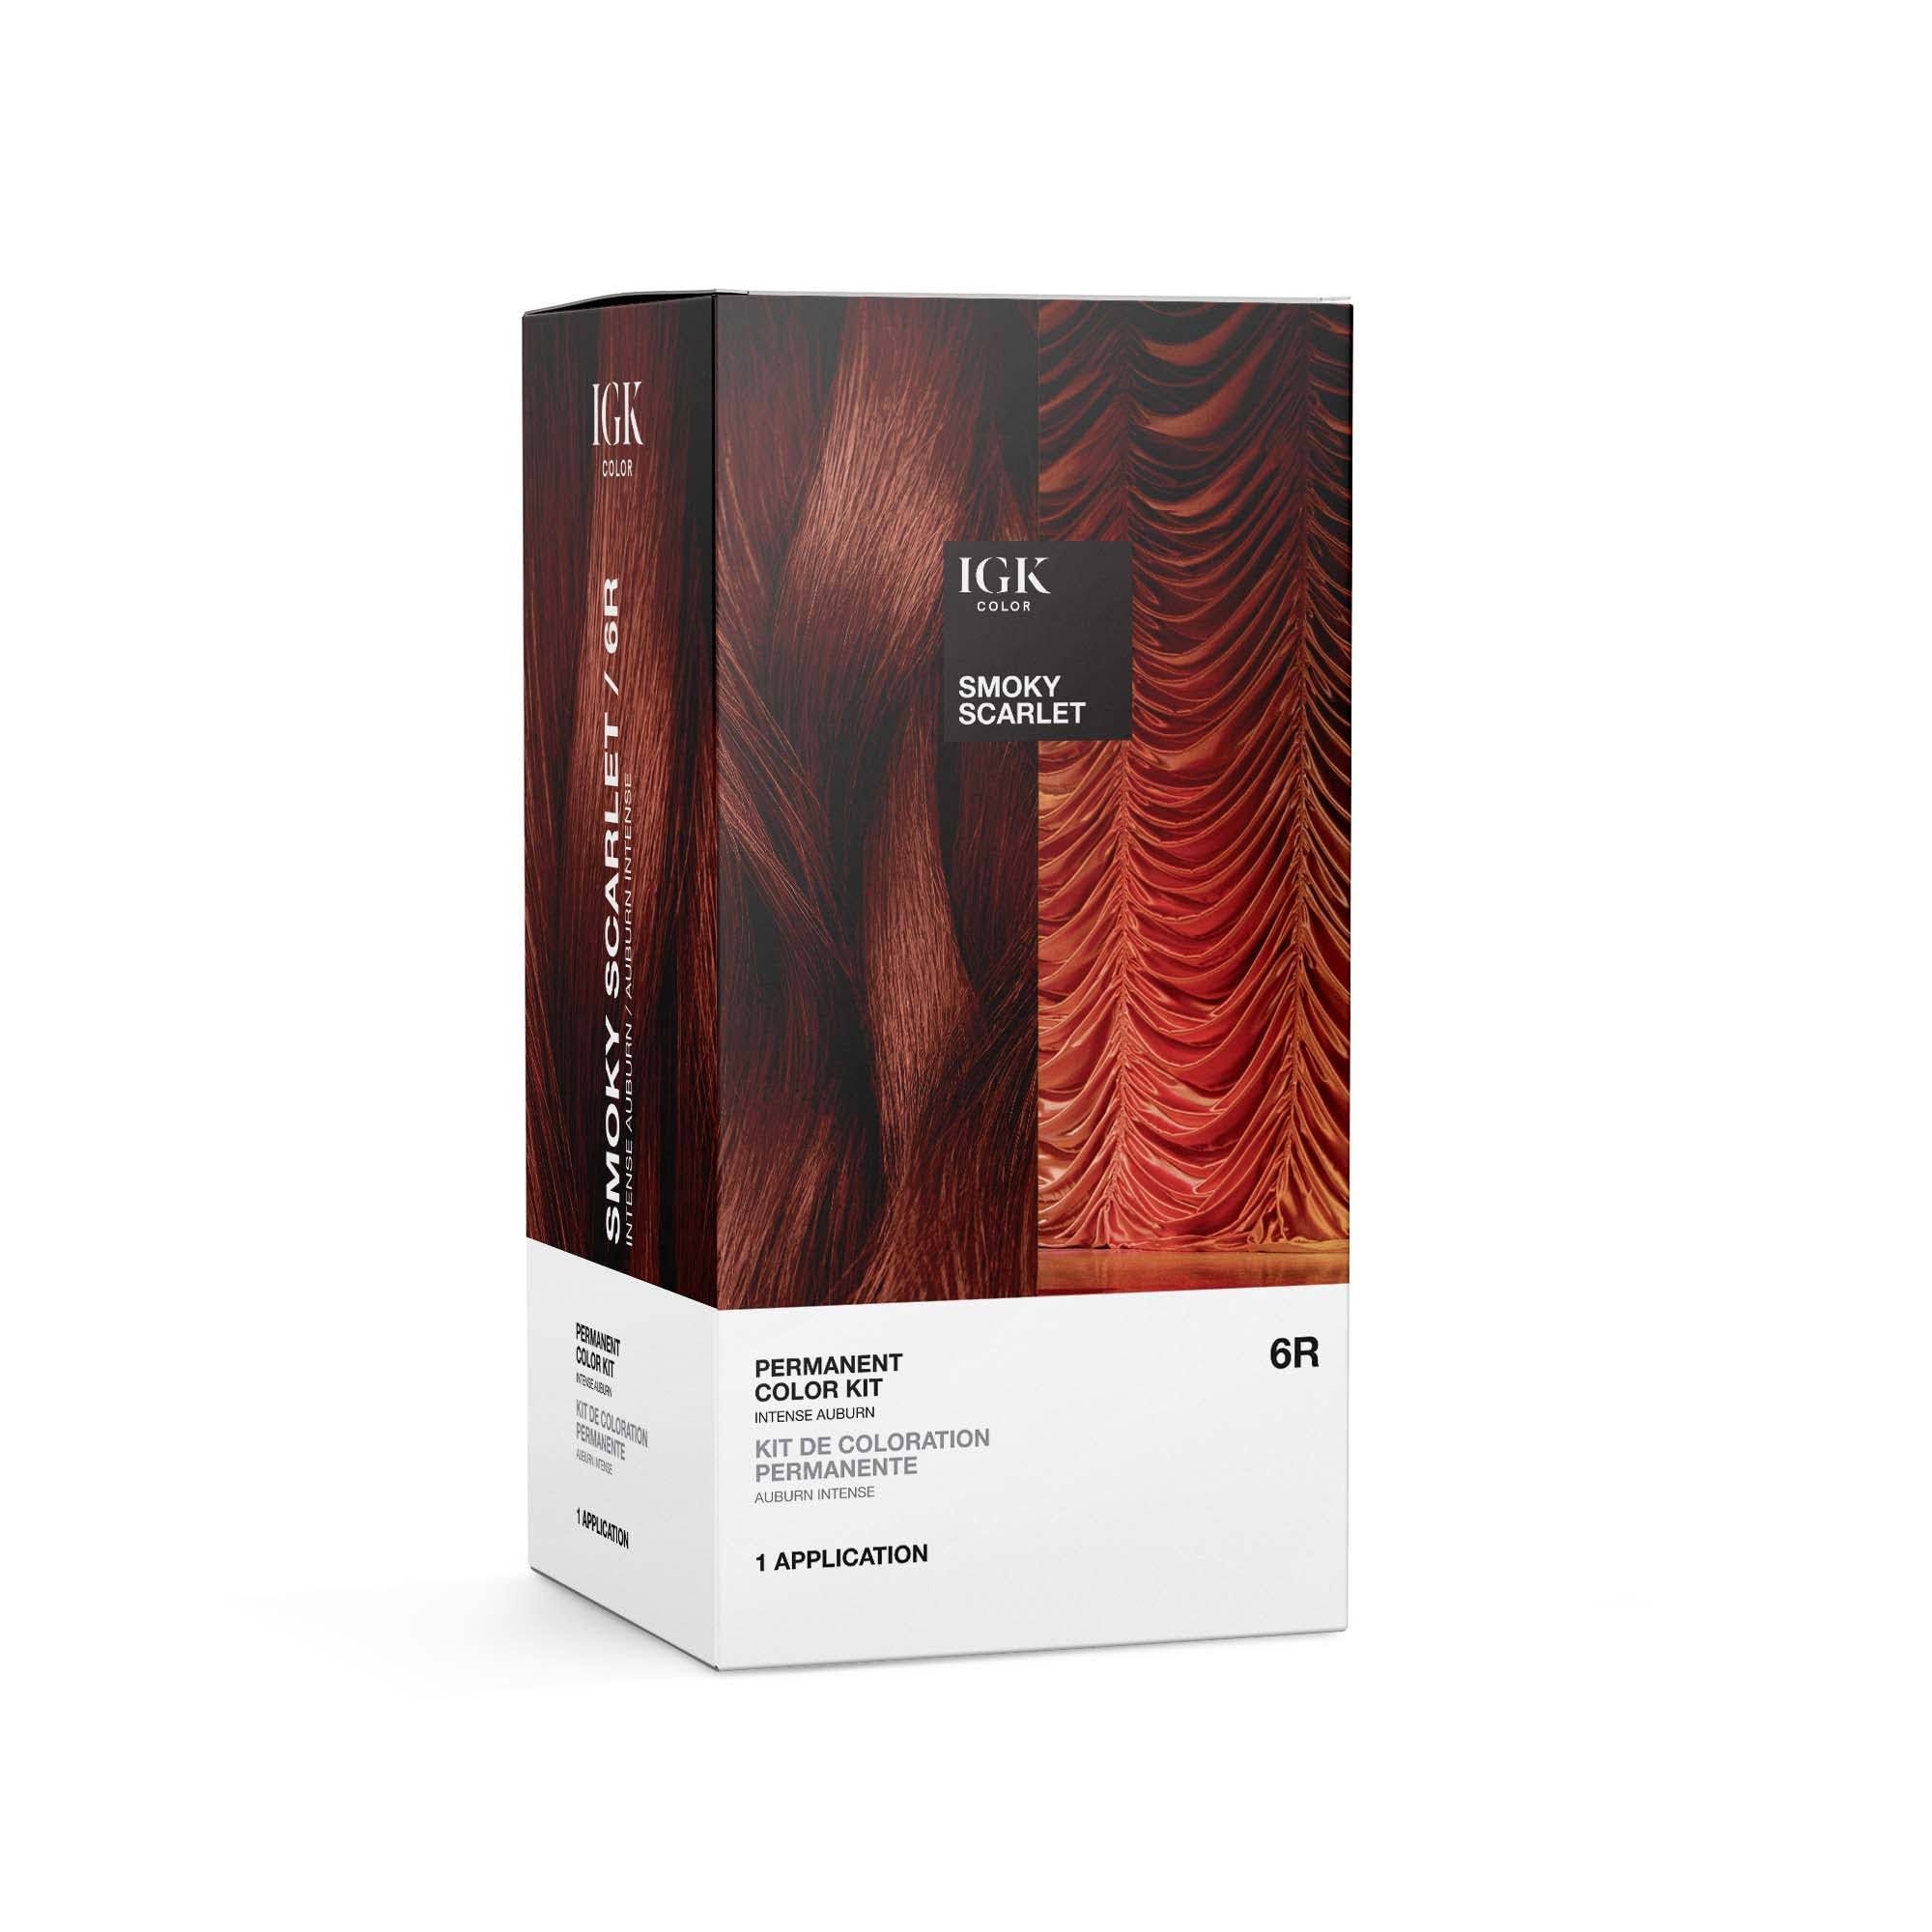 Igk Permanent Color Kit: Smoky Scarlet Burgundy Hair Dye | Image